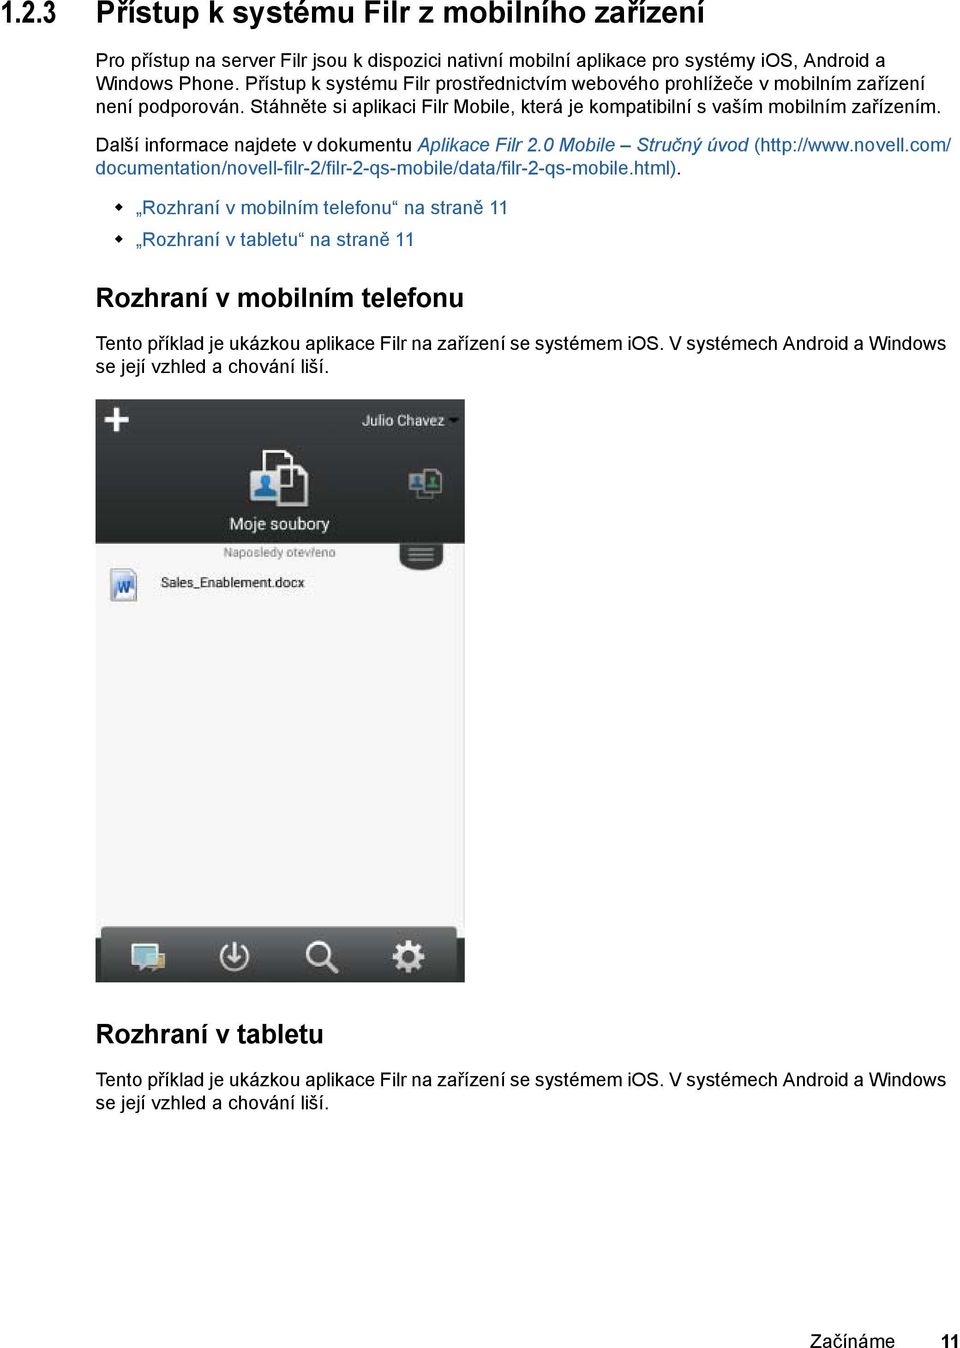 Další informace najdete v dokumentu Aplikace Filr 2.0 Mobile Stručný úvod (http://www.novell.com/ documentation/novell-filr-2/filr-2-qs-mobile/data/filr-2-qs-mobile.html).